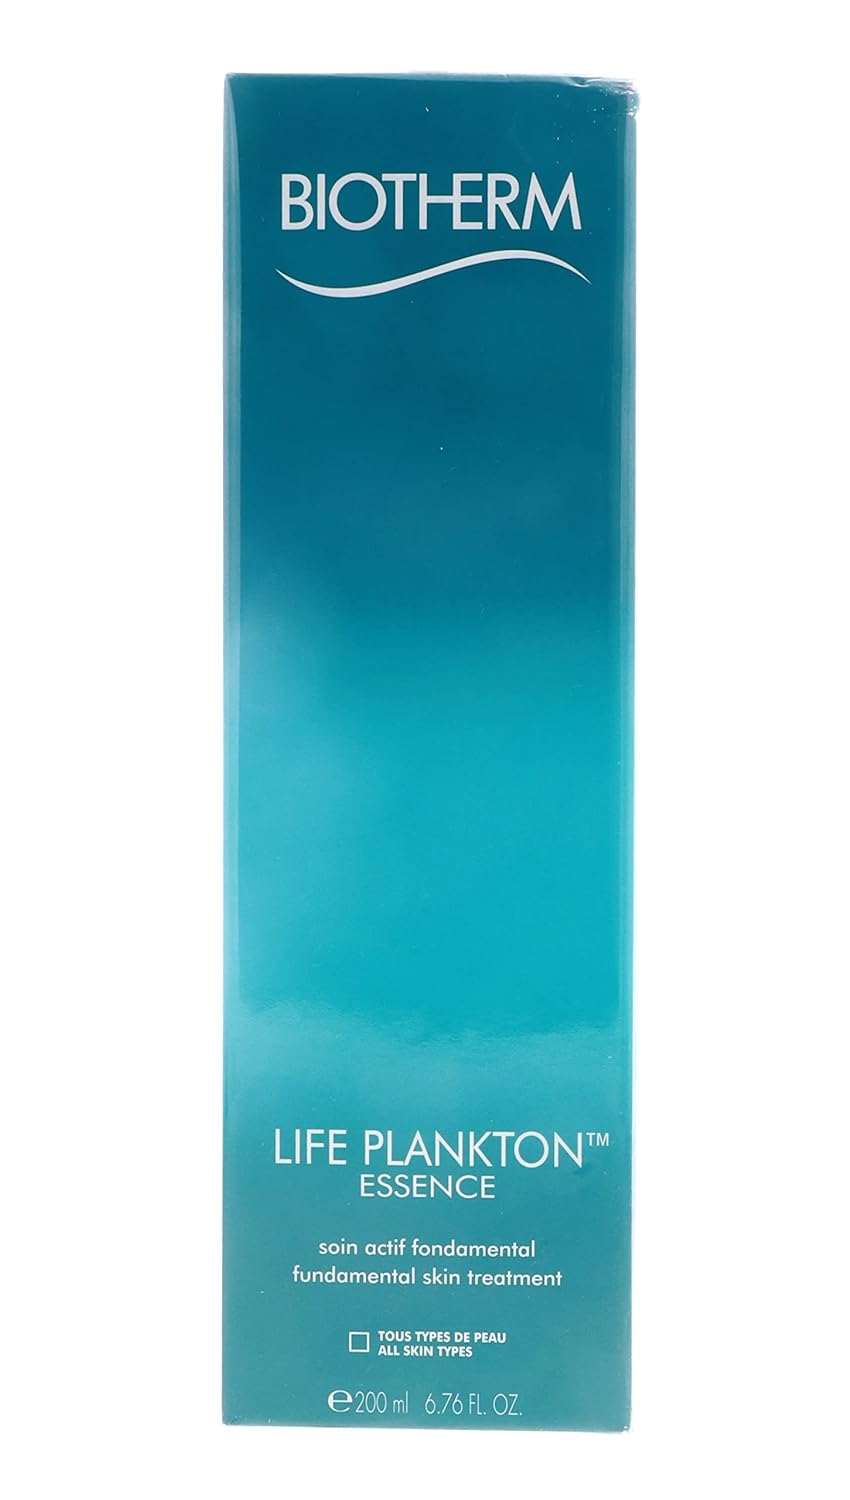 Biotherm Life Plankton Essence, 6.76